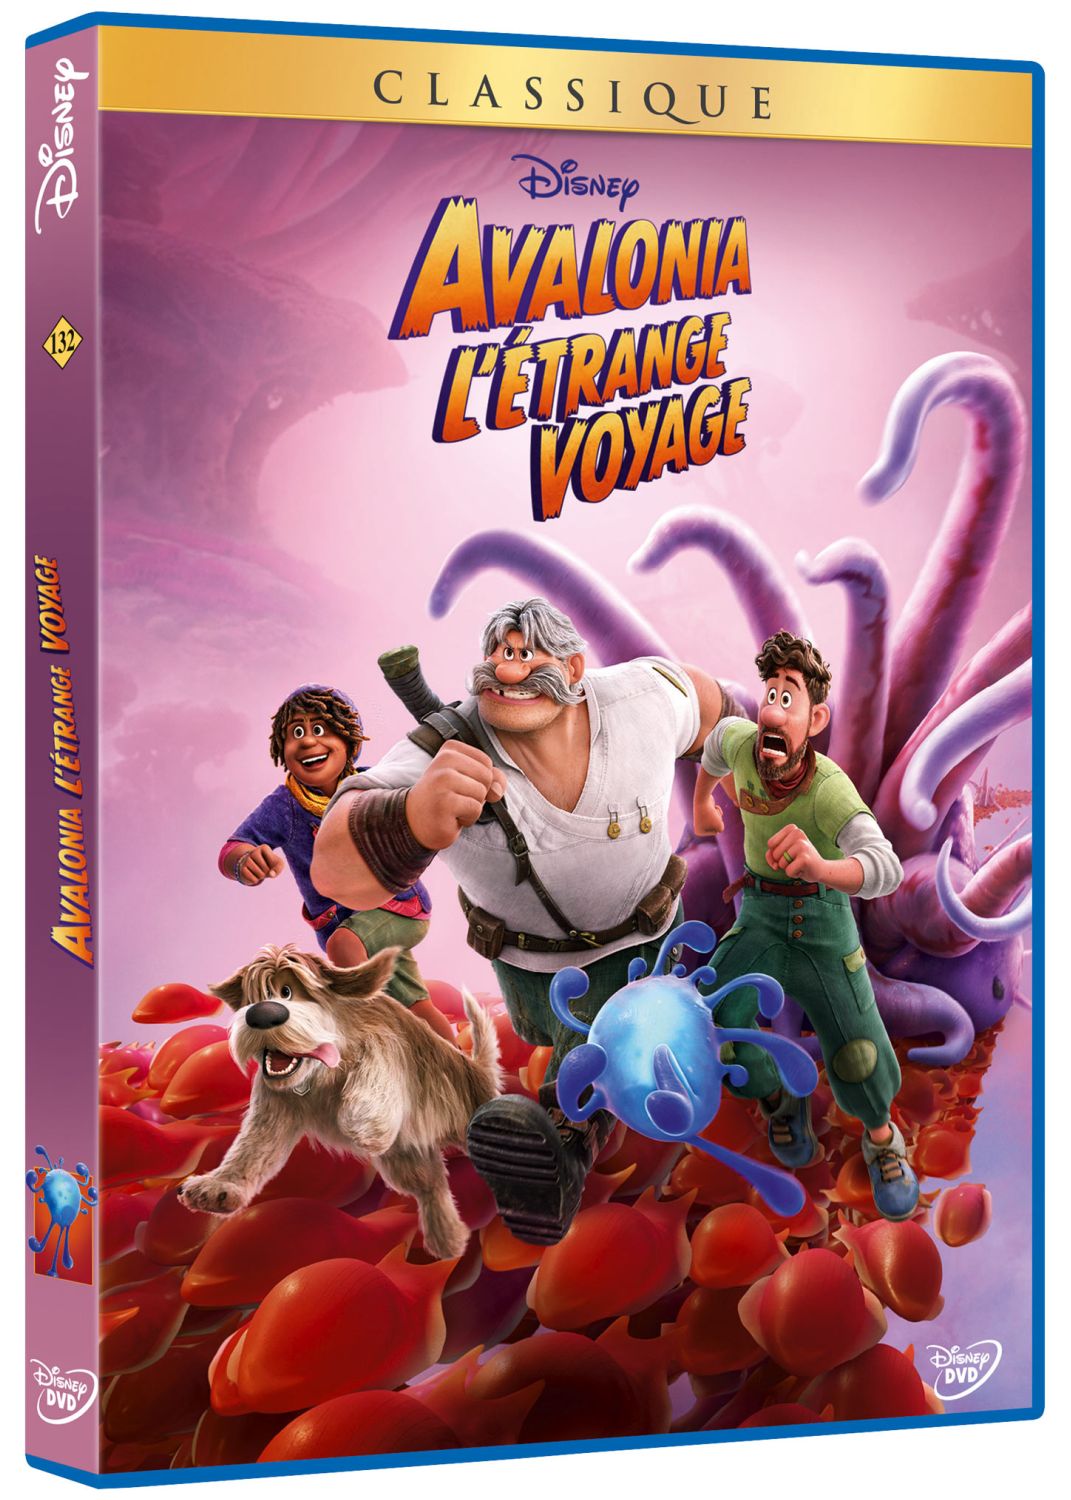 Avalonia, l'étrange voyage |DVD/Blu-ray à la location]